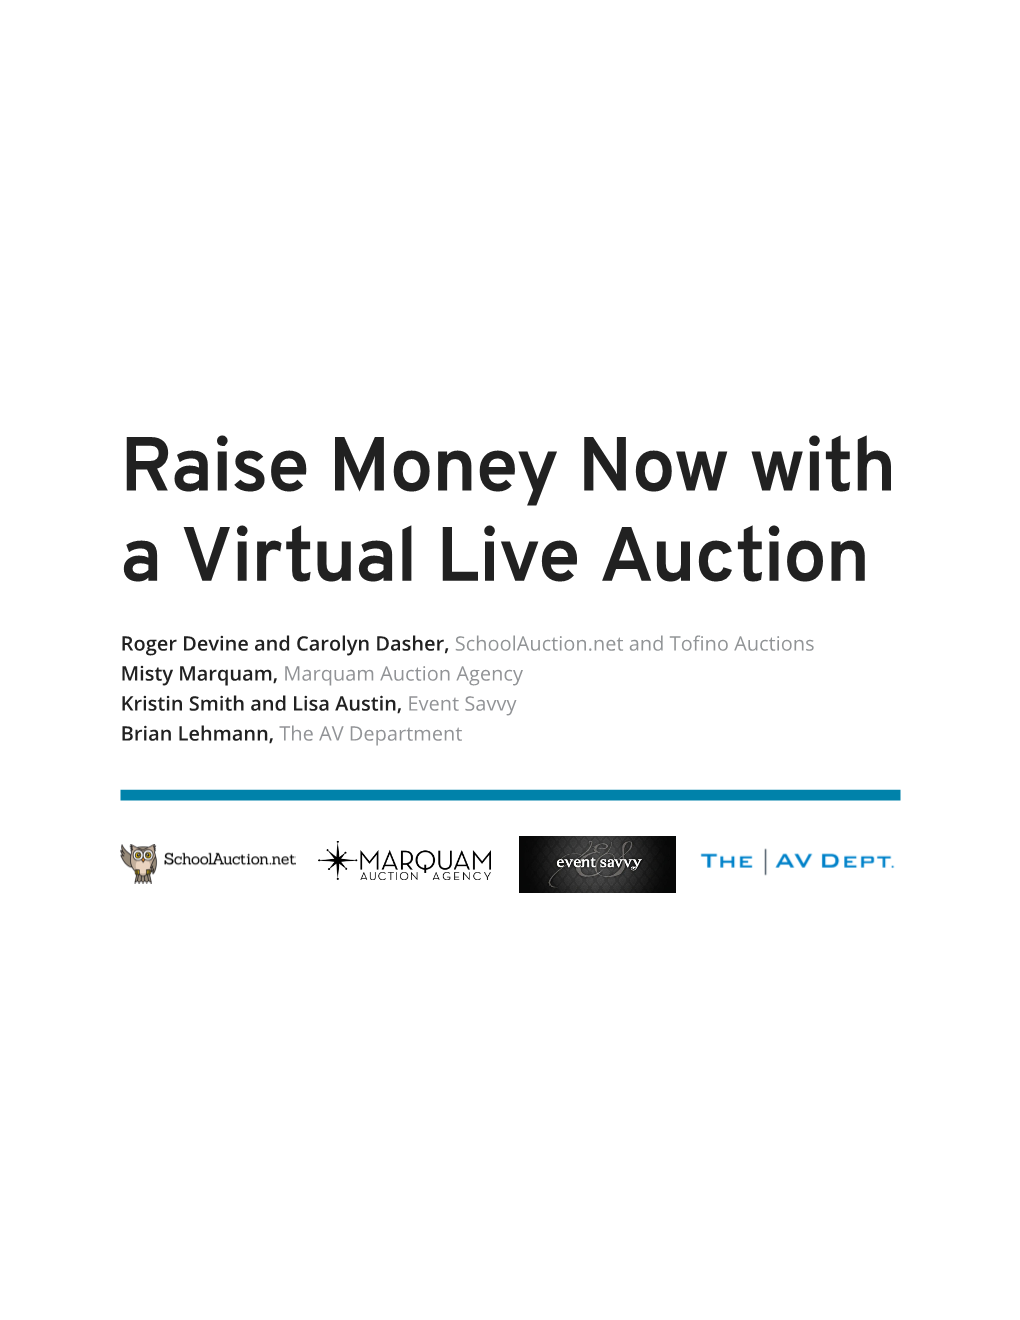 Raise Money Now with a Virtual Live Auction